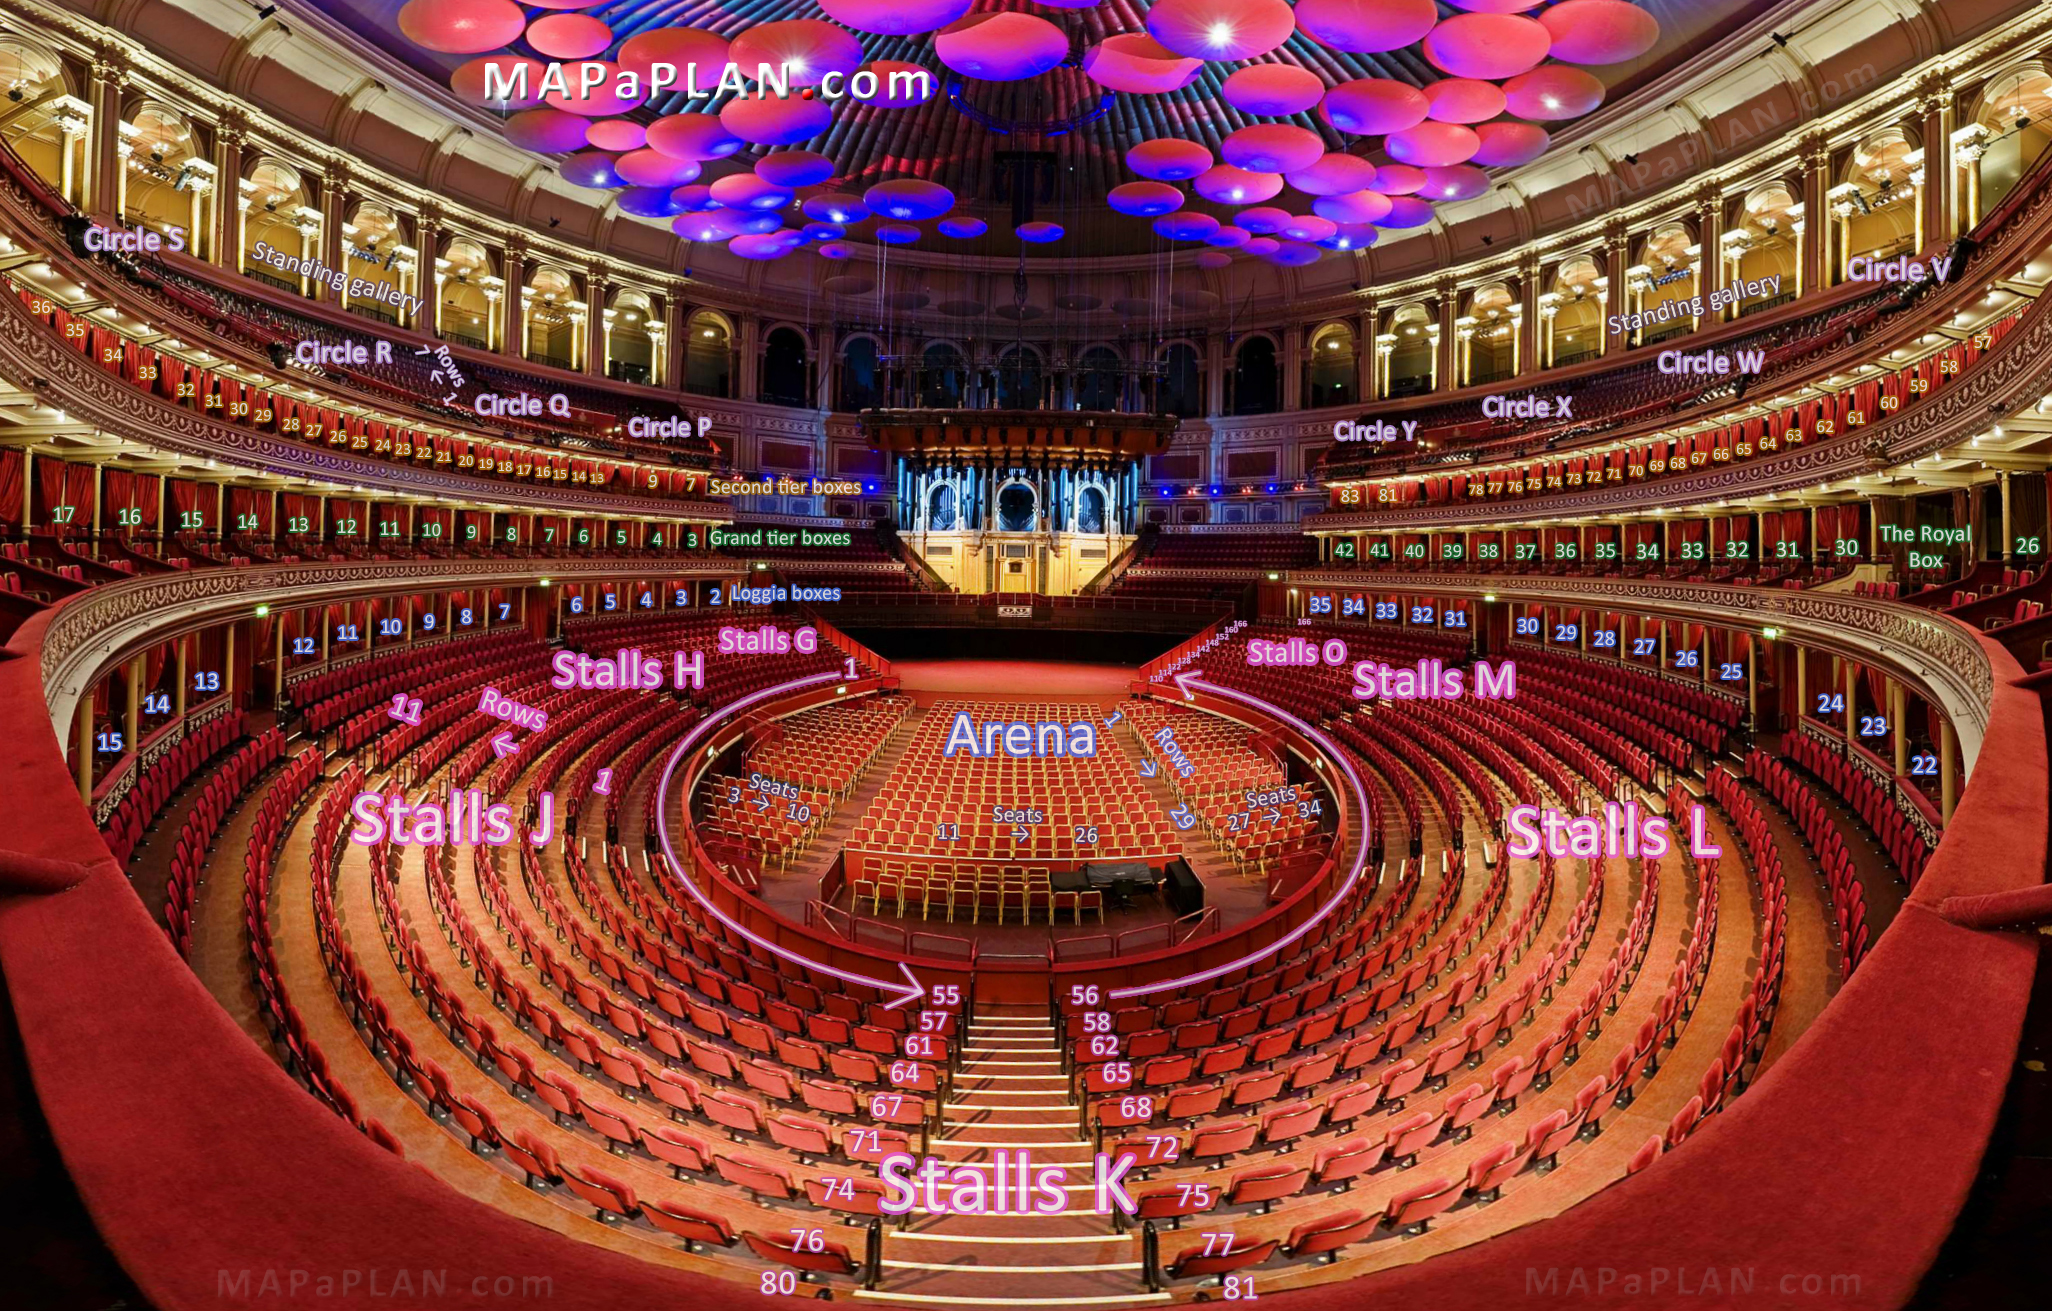 interactive virtual tour 3d model 360 degrees panoramic layout Royal Albert Hall seating plan